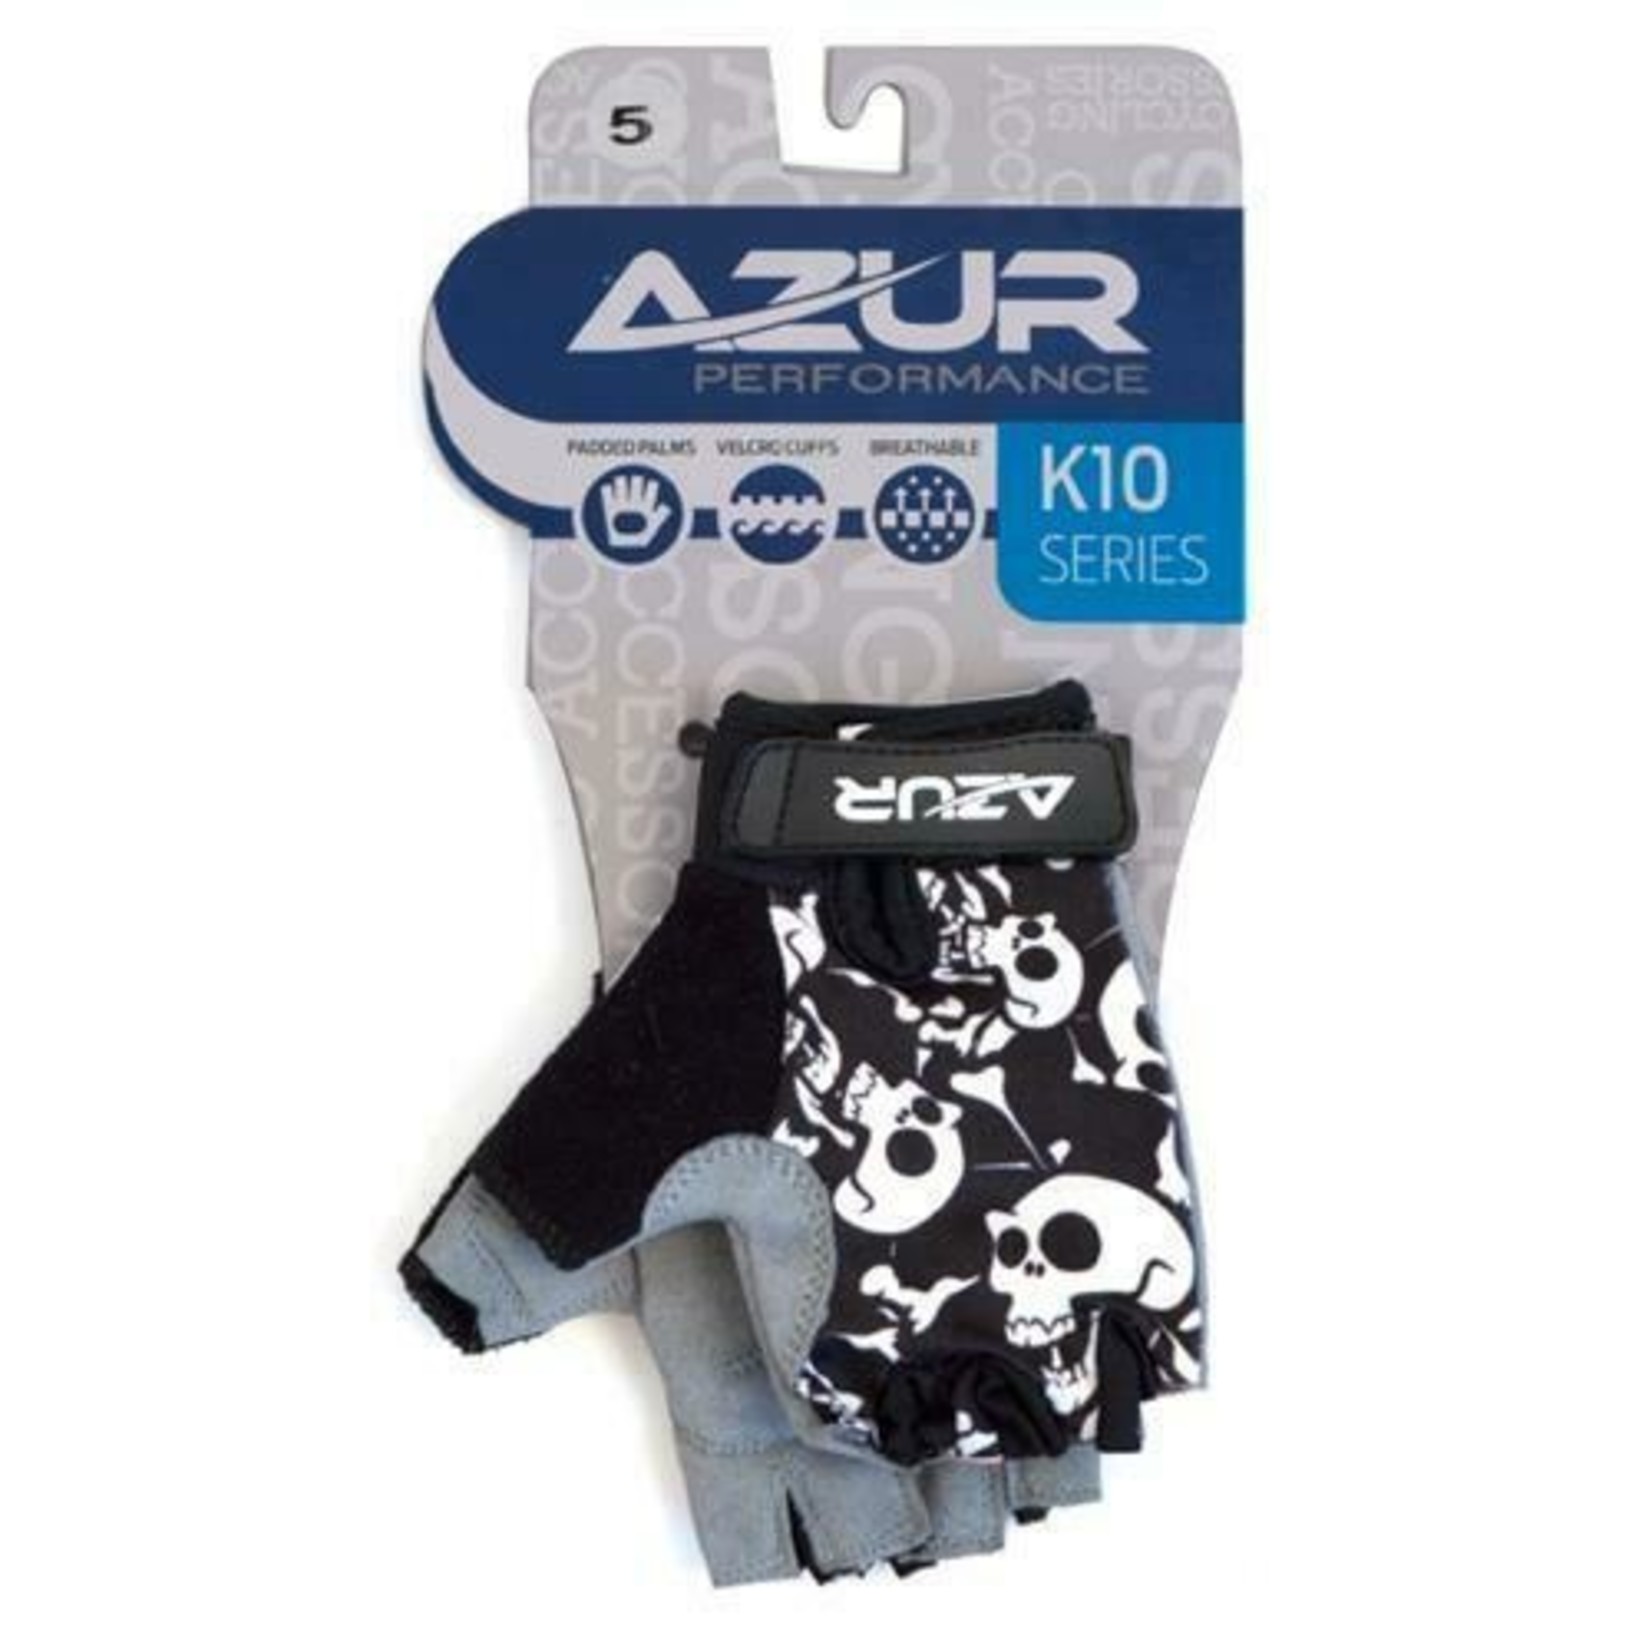 Azur Azur Bike/Cycling Padded Palms Glove - K10 Series - Boys - Skulls - Size 5